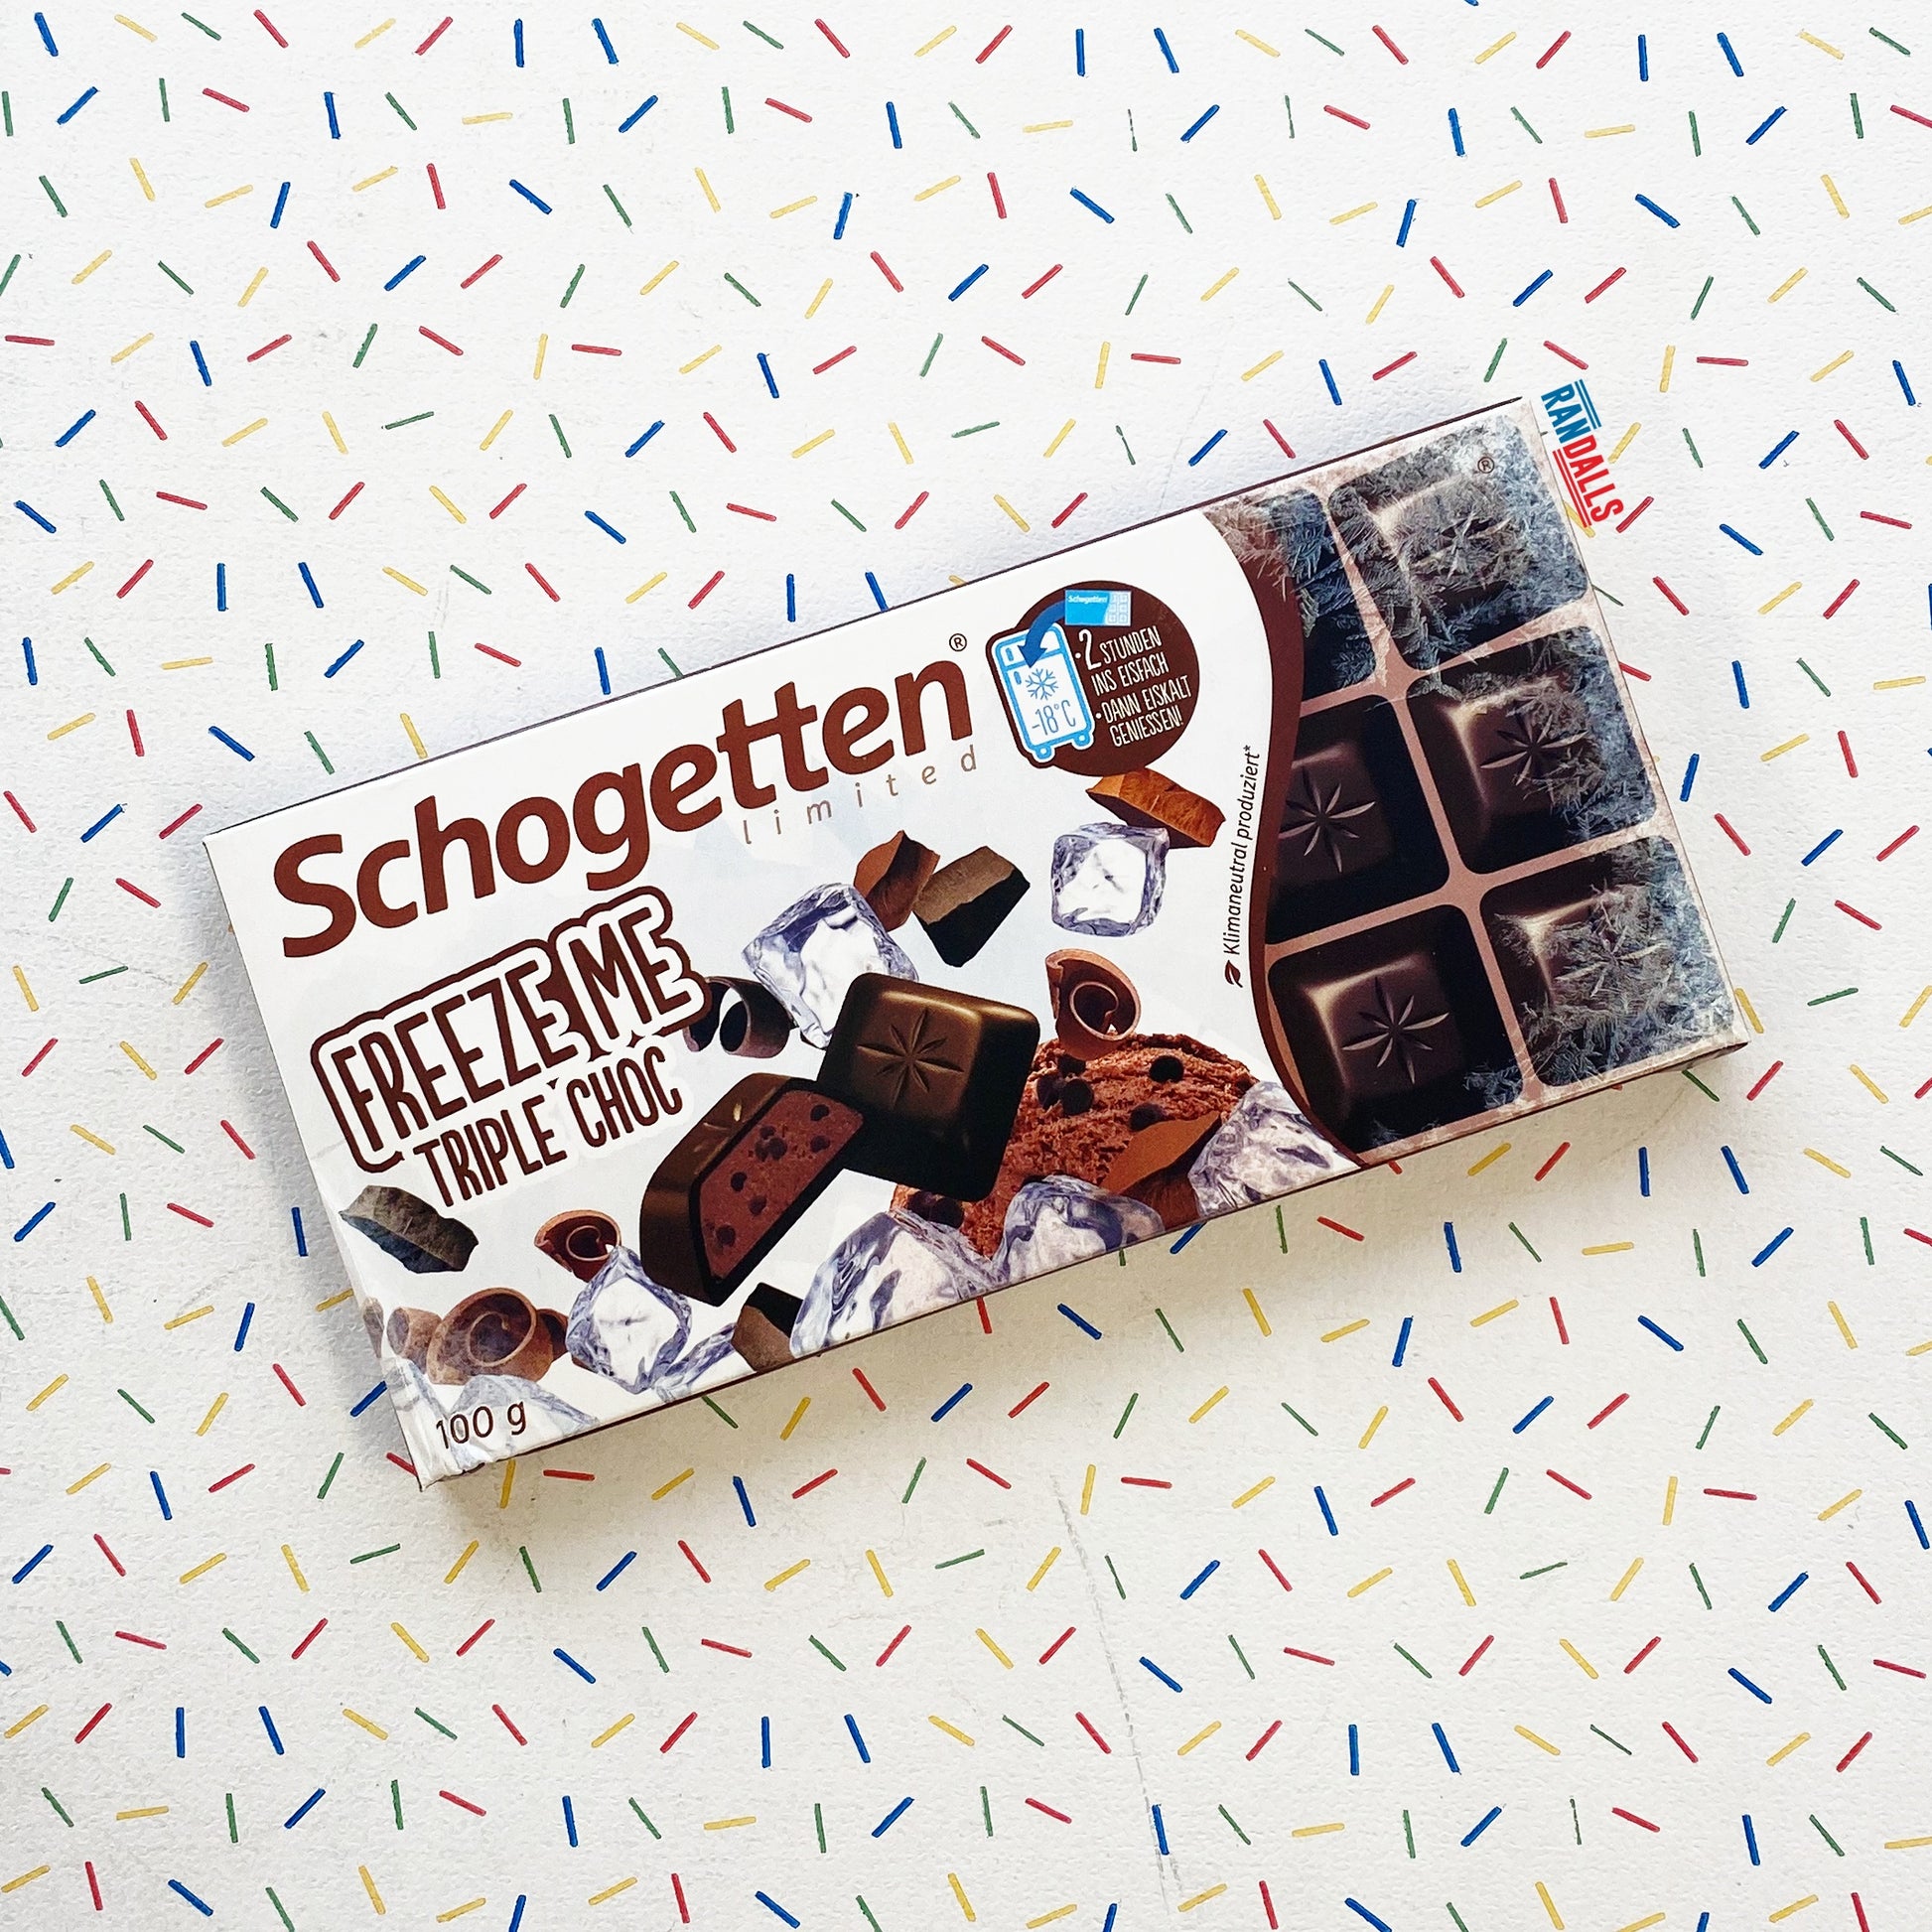 schogetten limited edition, freeze me triple choc, german chocolate, randalls,